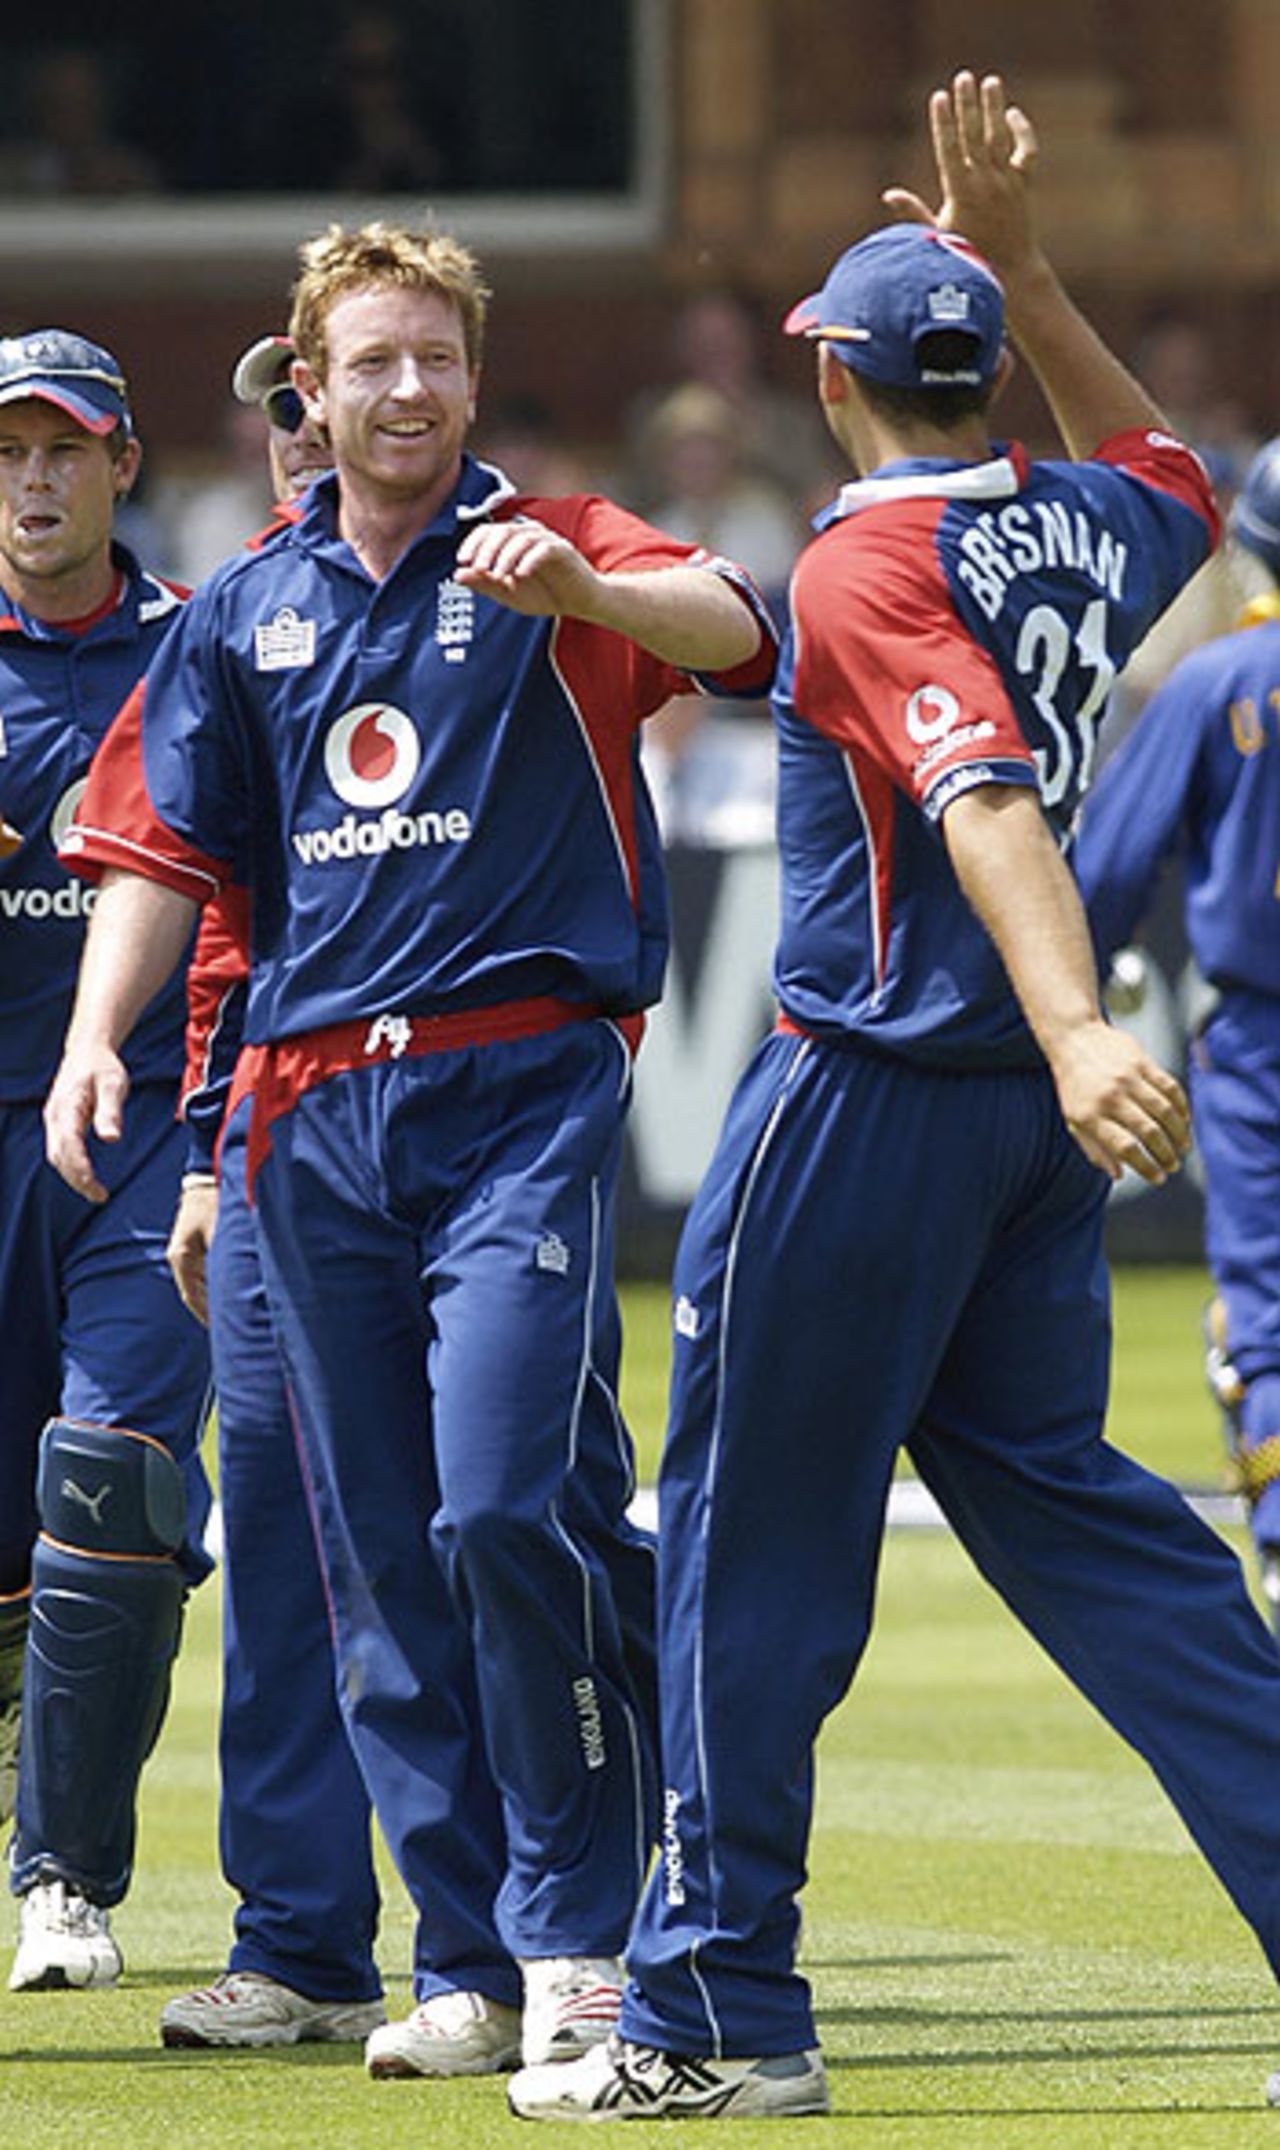 Paul Collingwood instigated England's revival, England v Sri Lanka, 1st ODI, Lord's, June 17, 2006